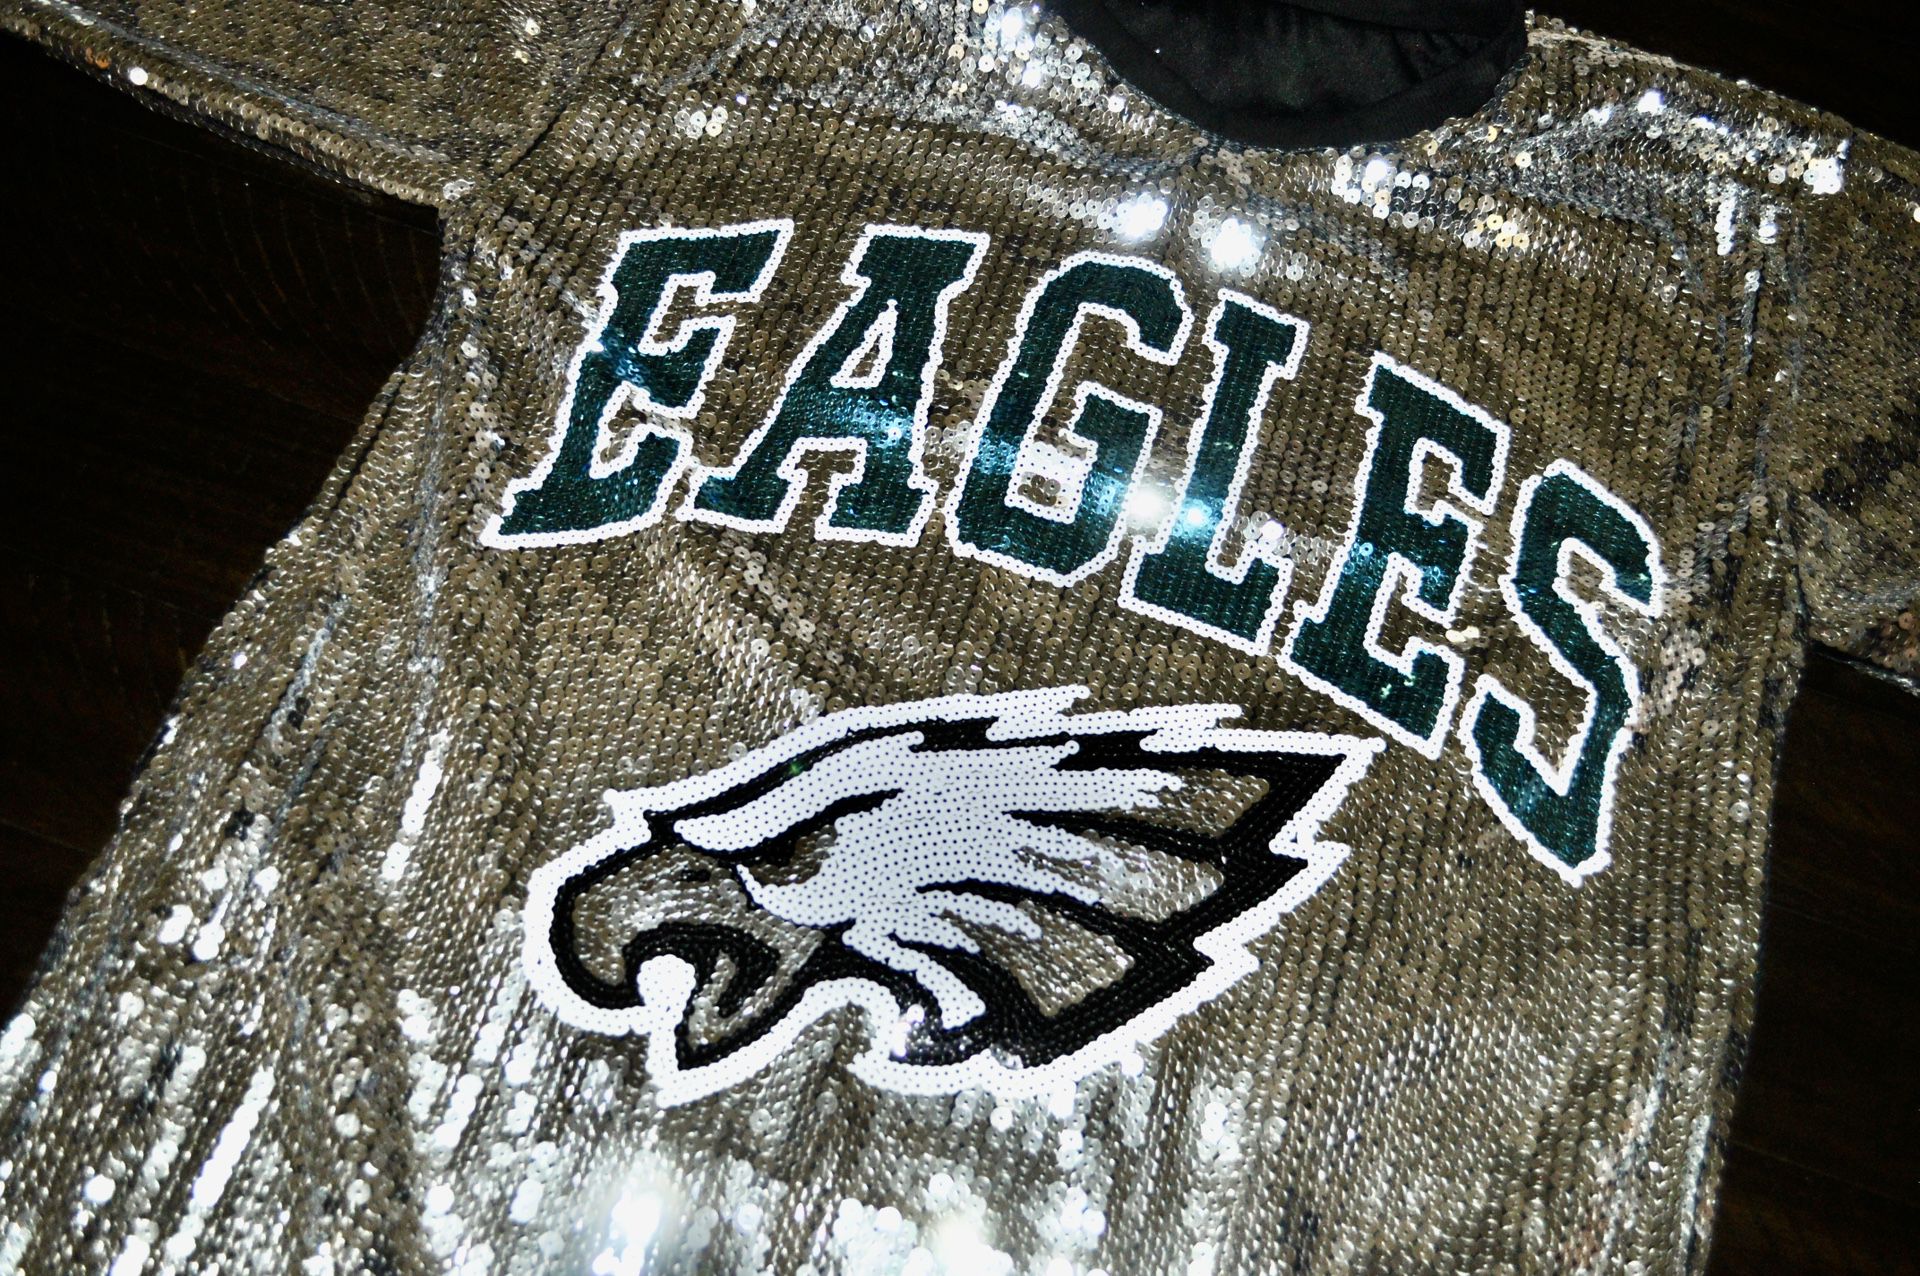 Philadelphia Eagles Sequin Dress